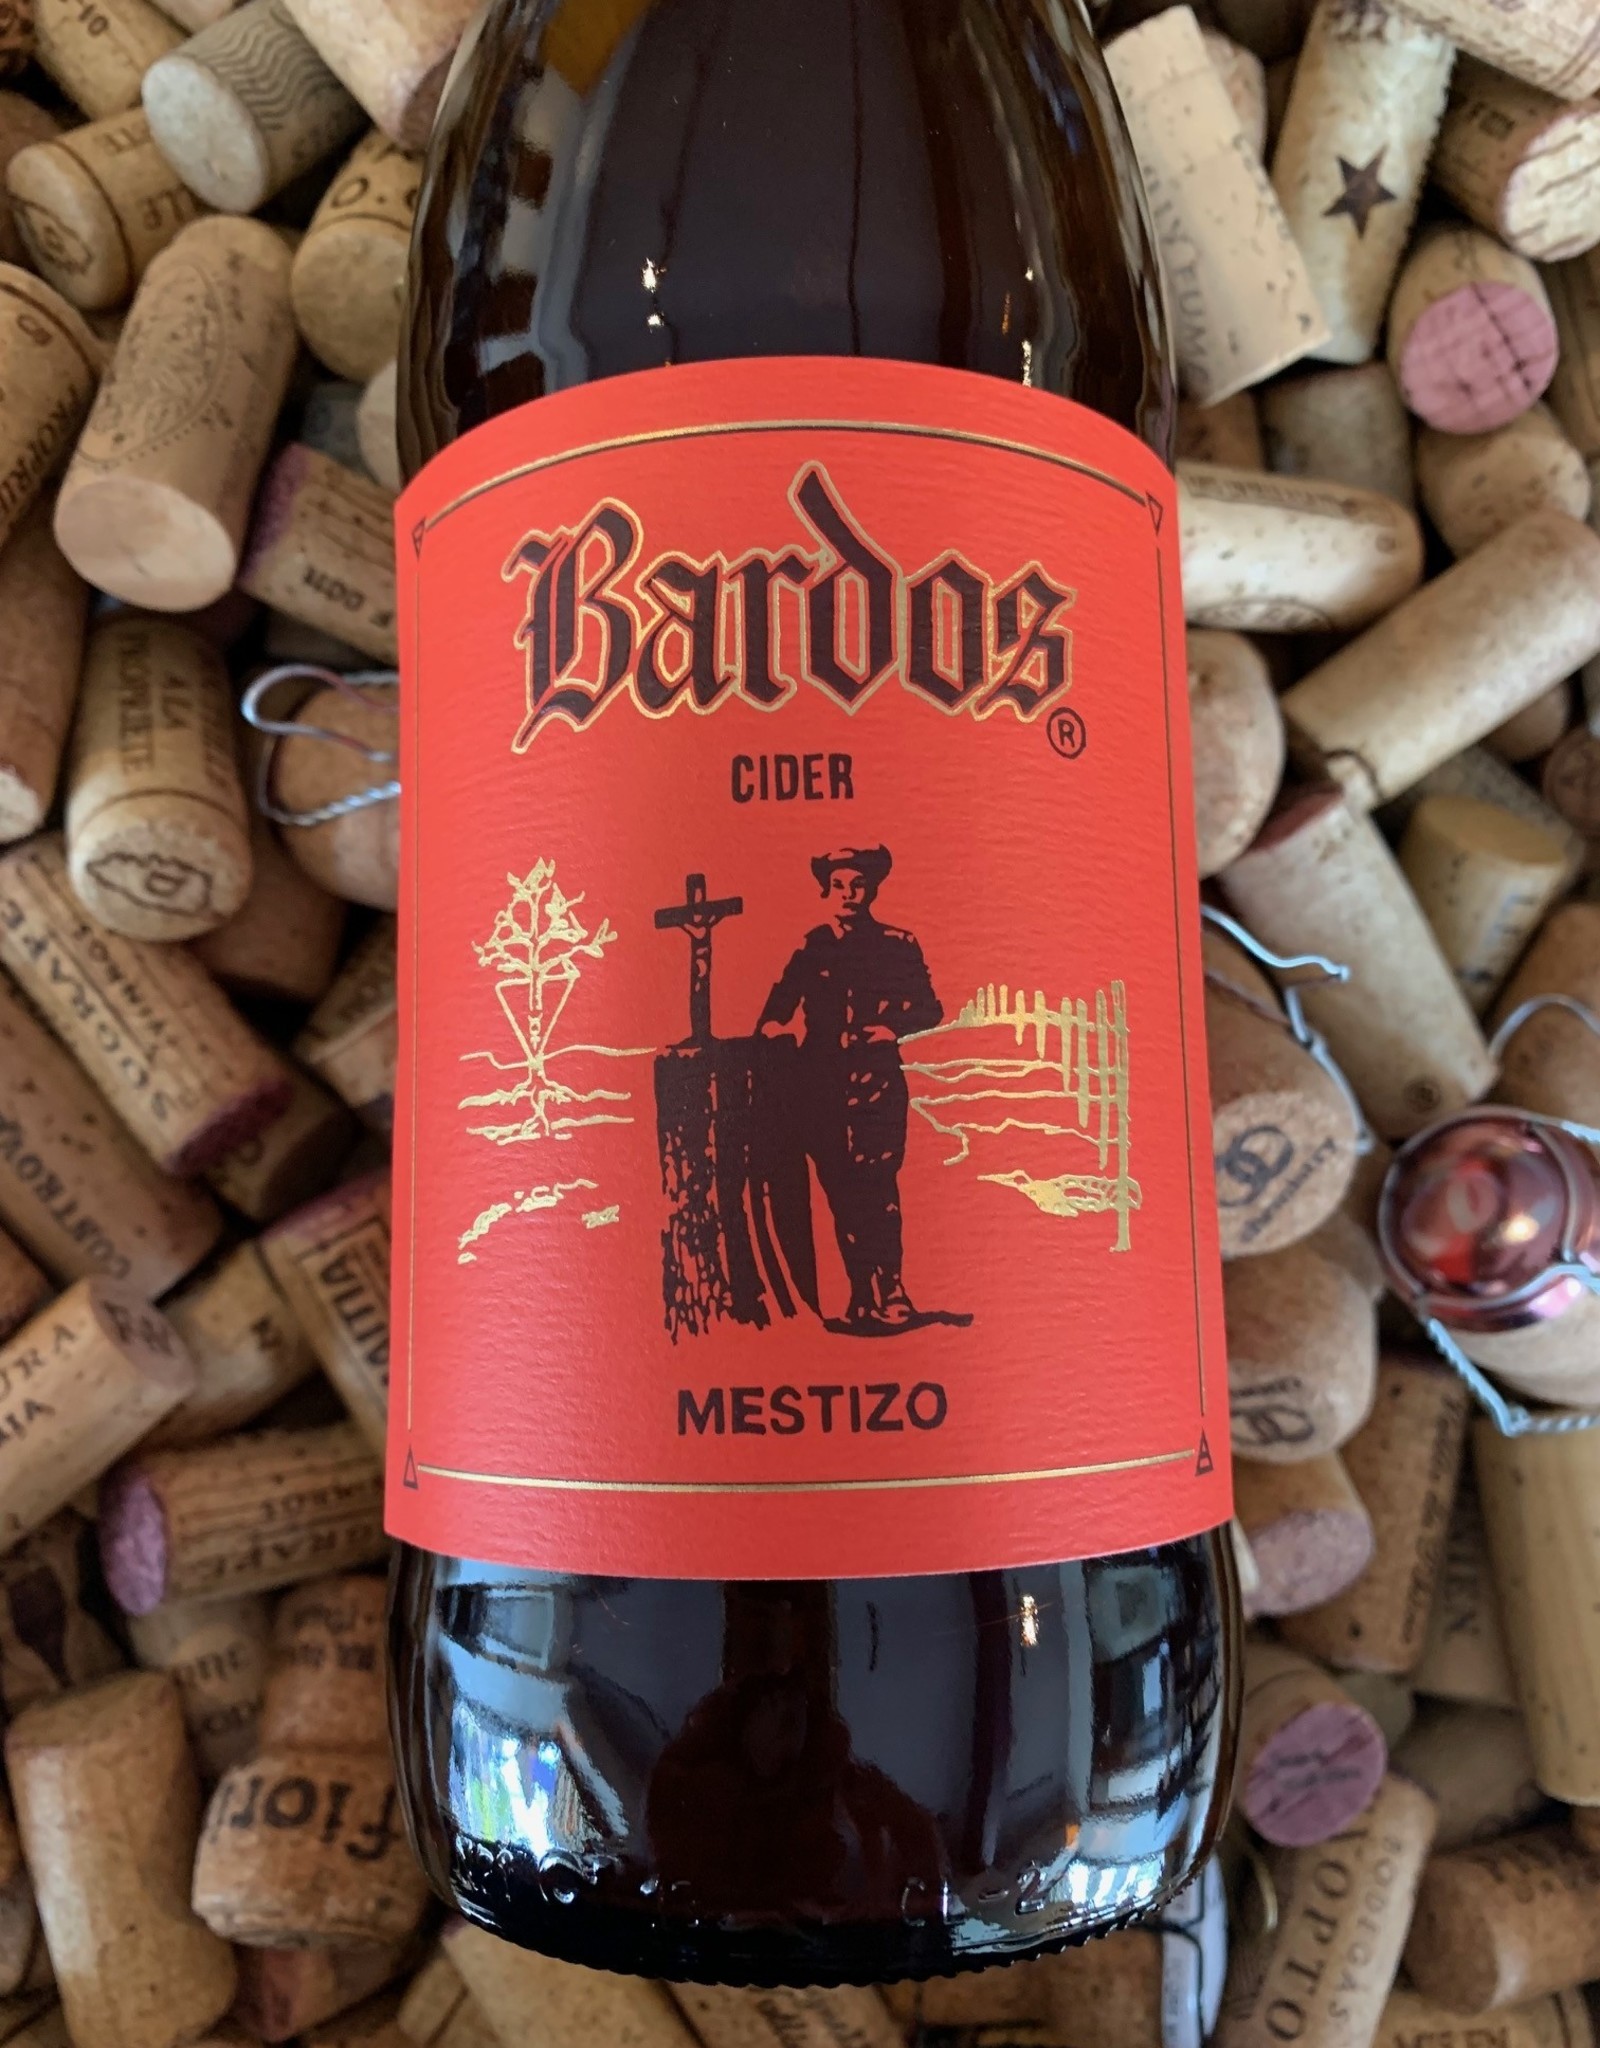 Bardos Cider "Yeti" California All Natural Cider (red label)